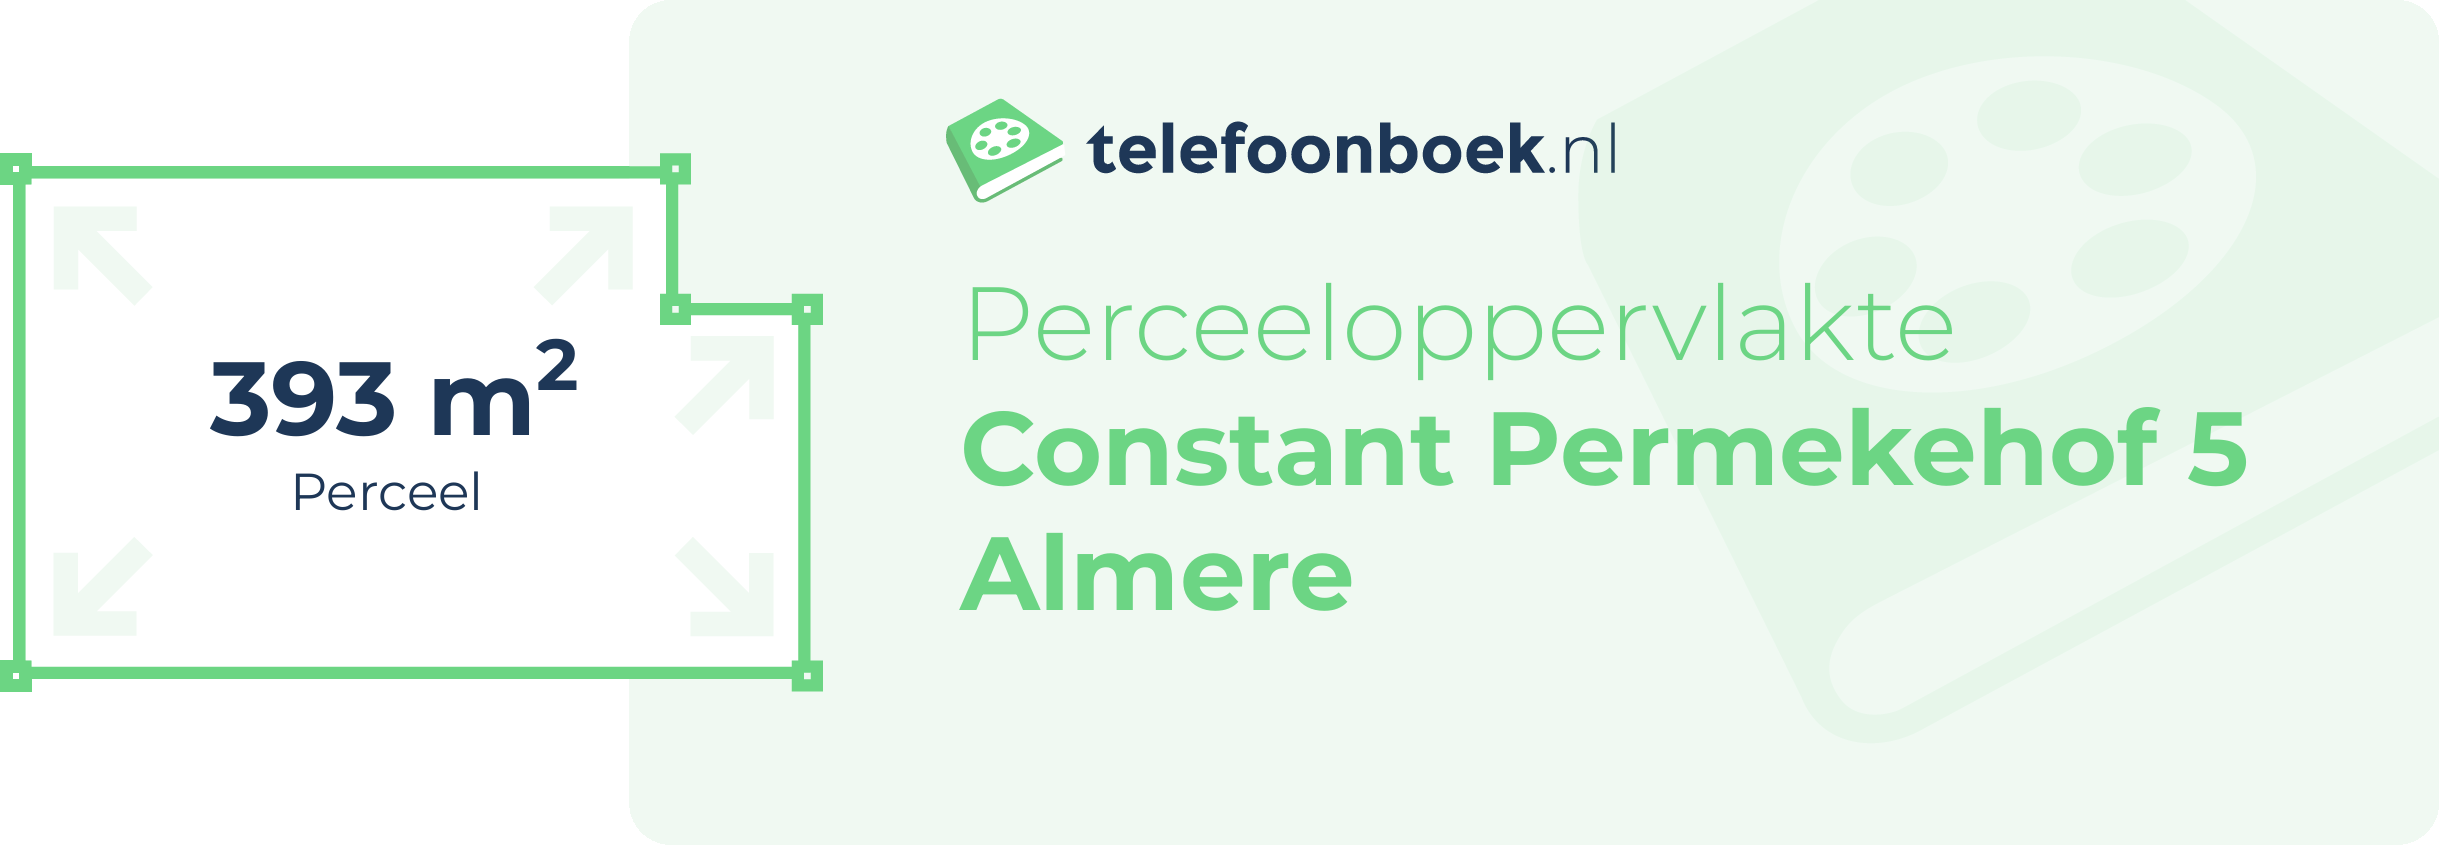 Perceeloppervlakte Constant Permekehof 5 Almere